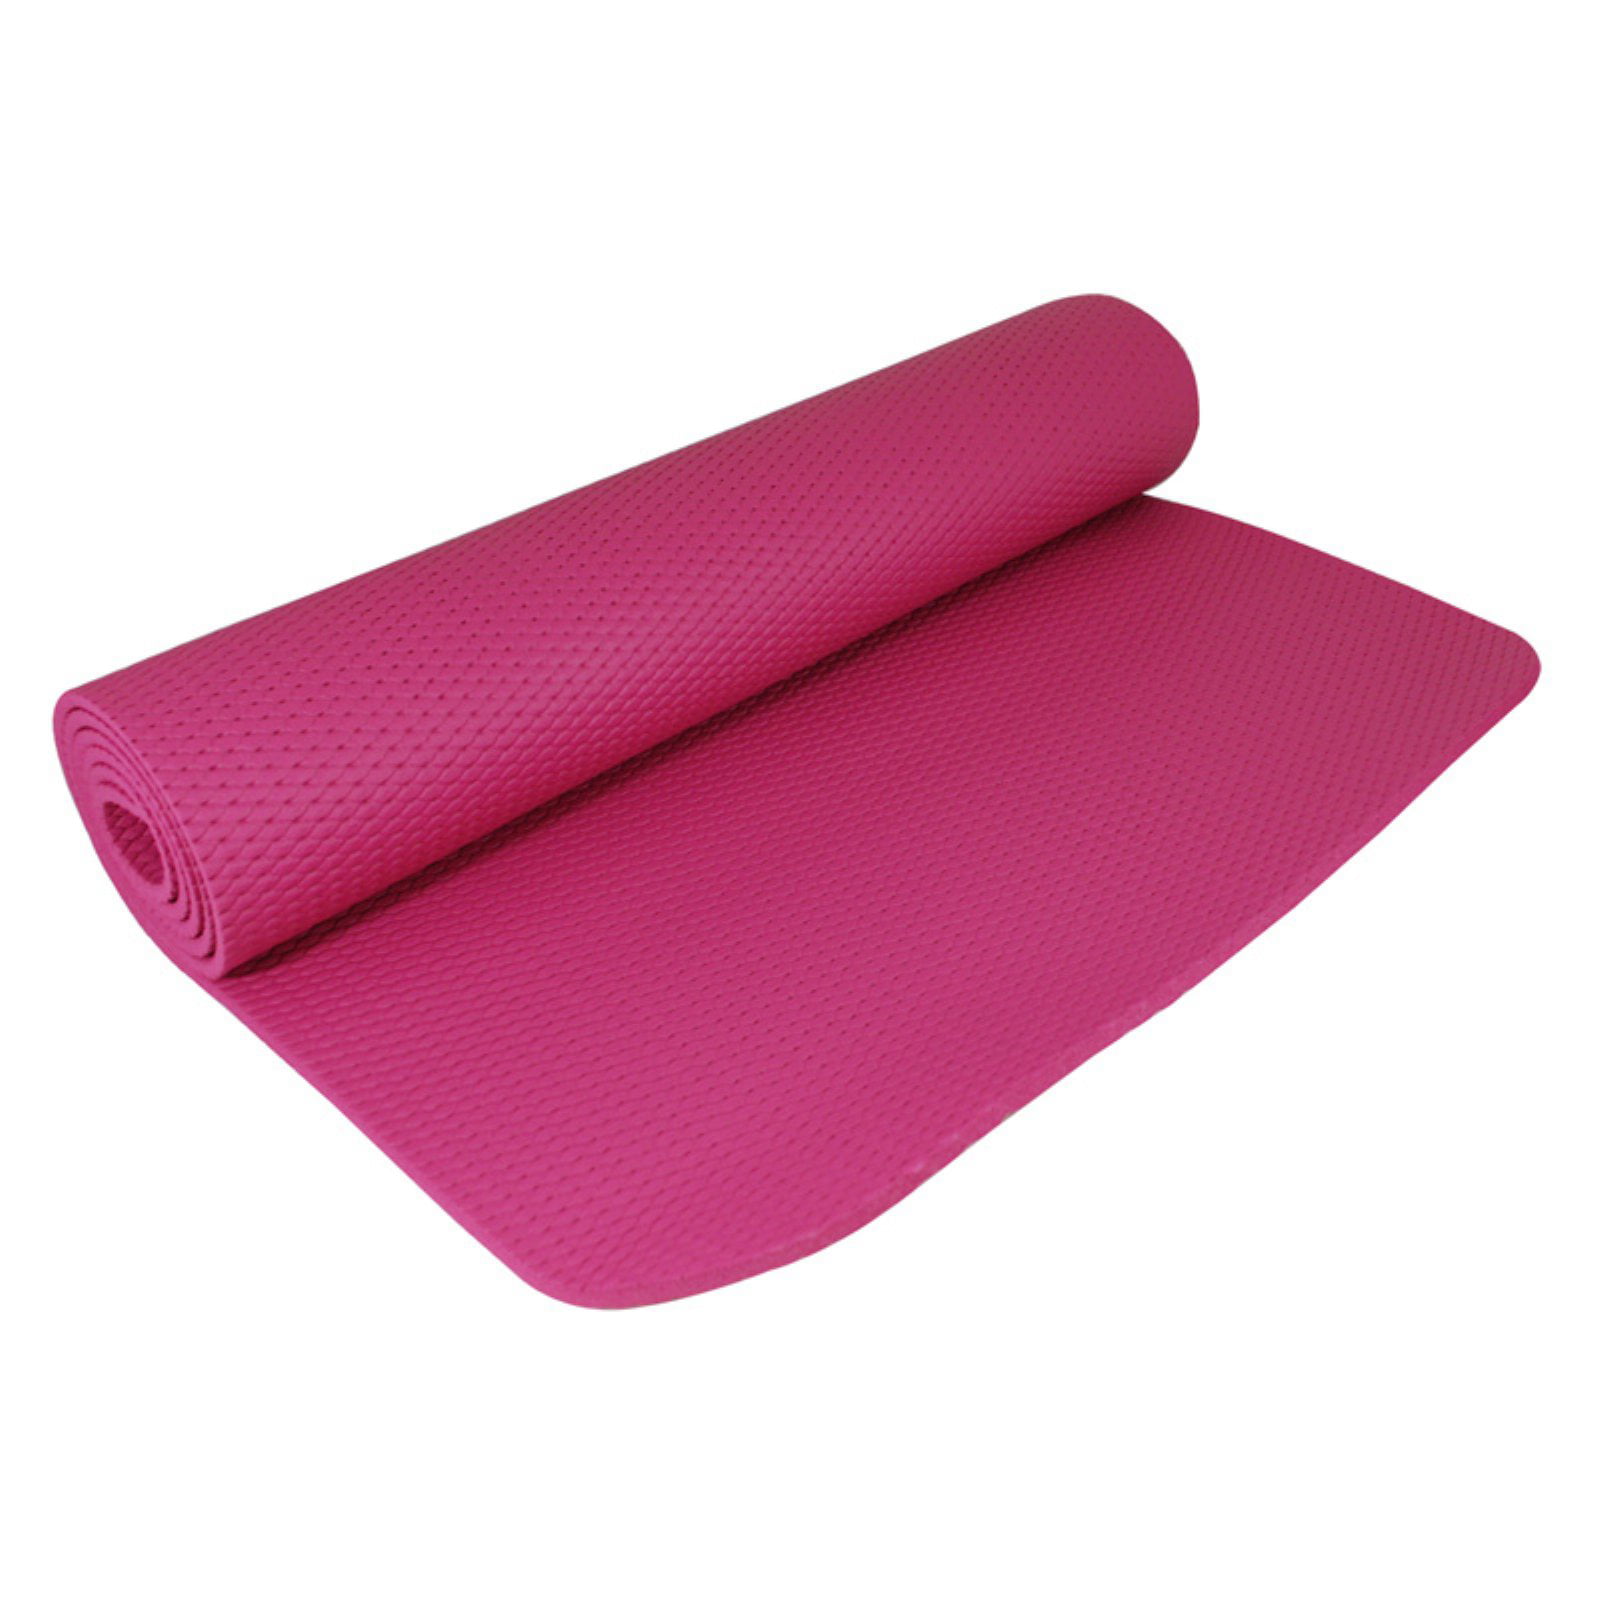 Yoga Direct Gaia Eco Yoga Mat with Round Corners - Pink - Walmart.com ...